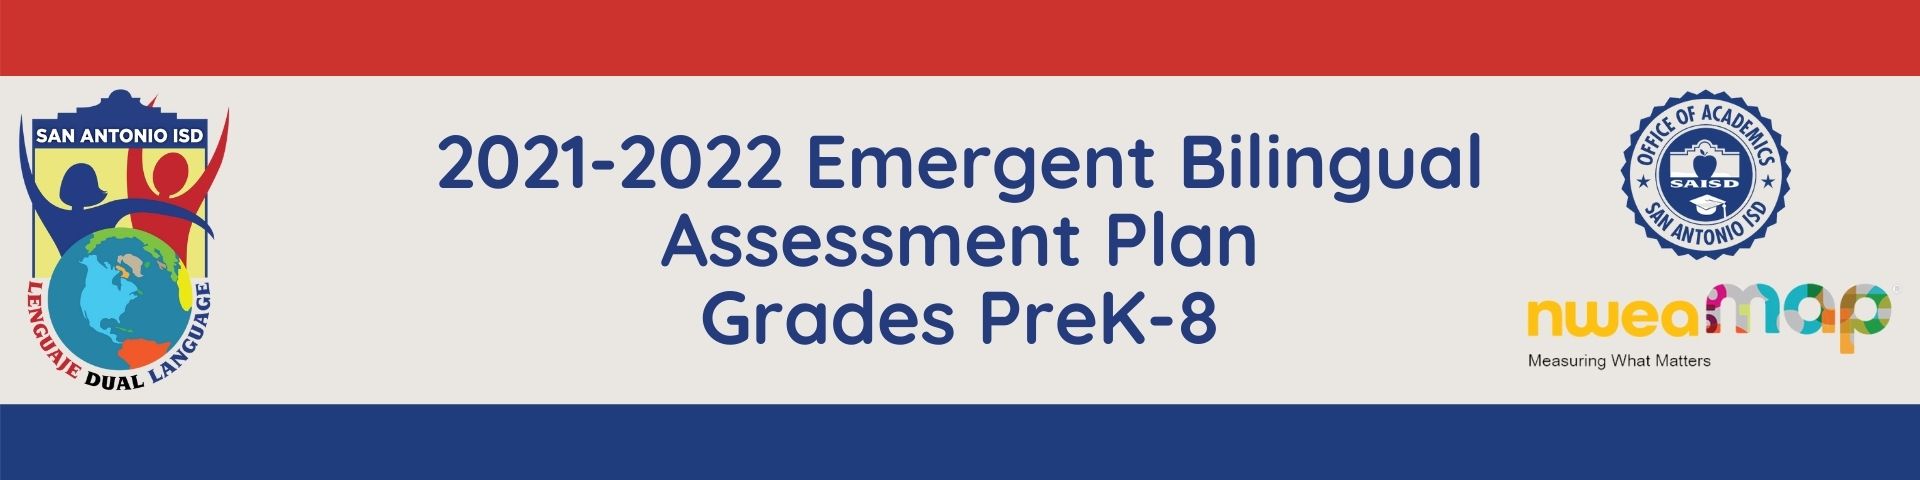 21-22 Emergent Bilingual Assessment Plan